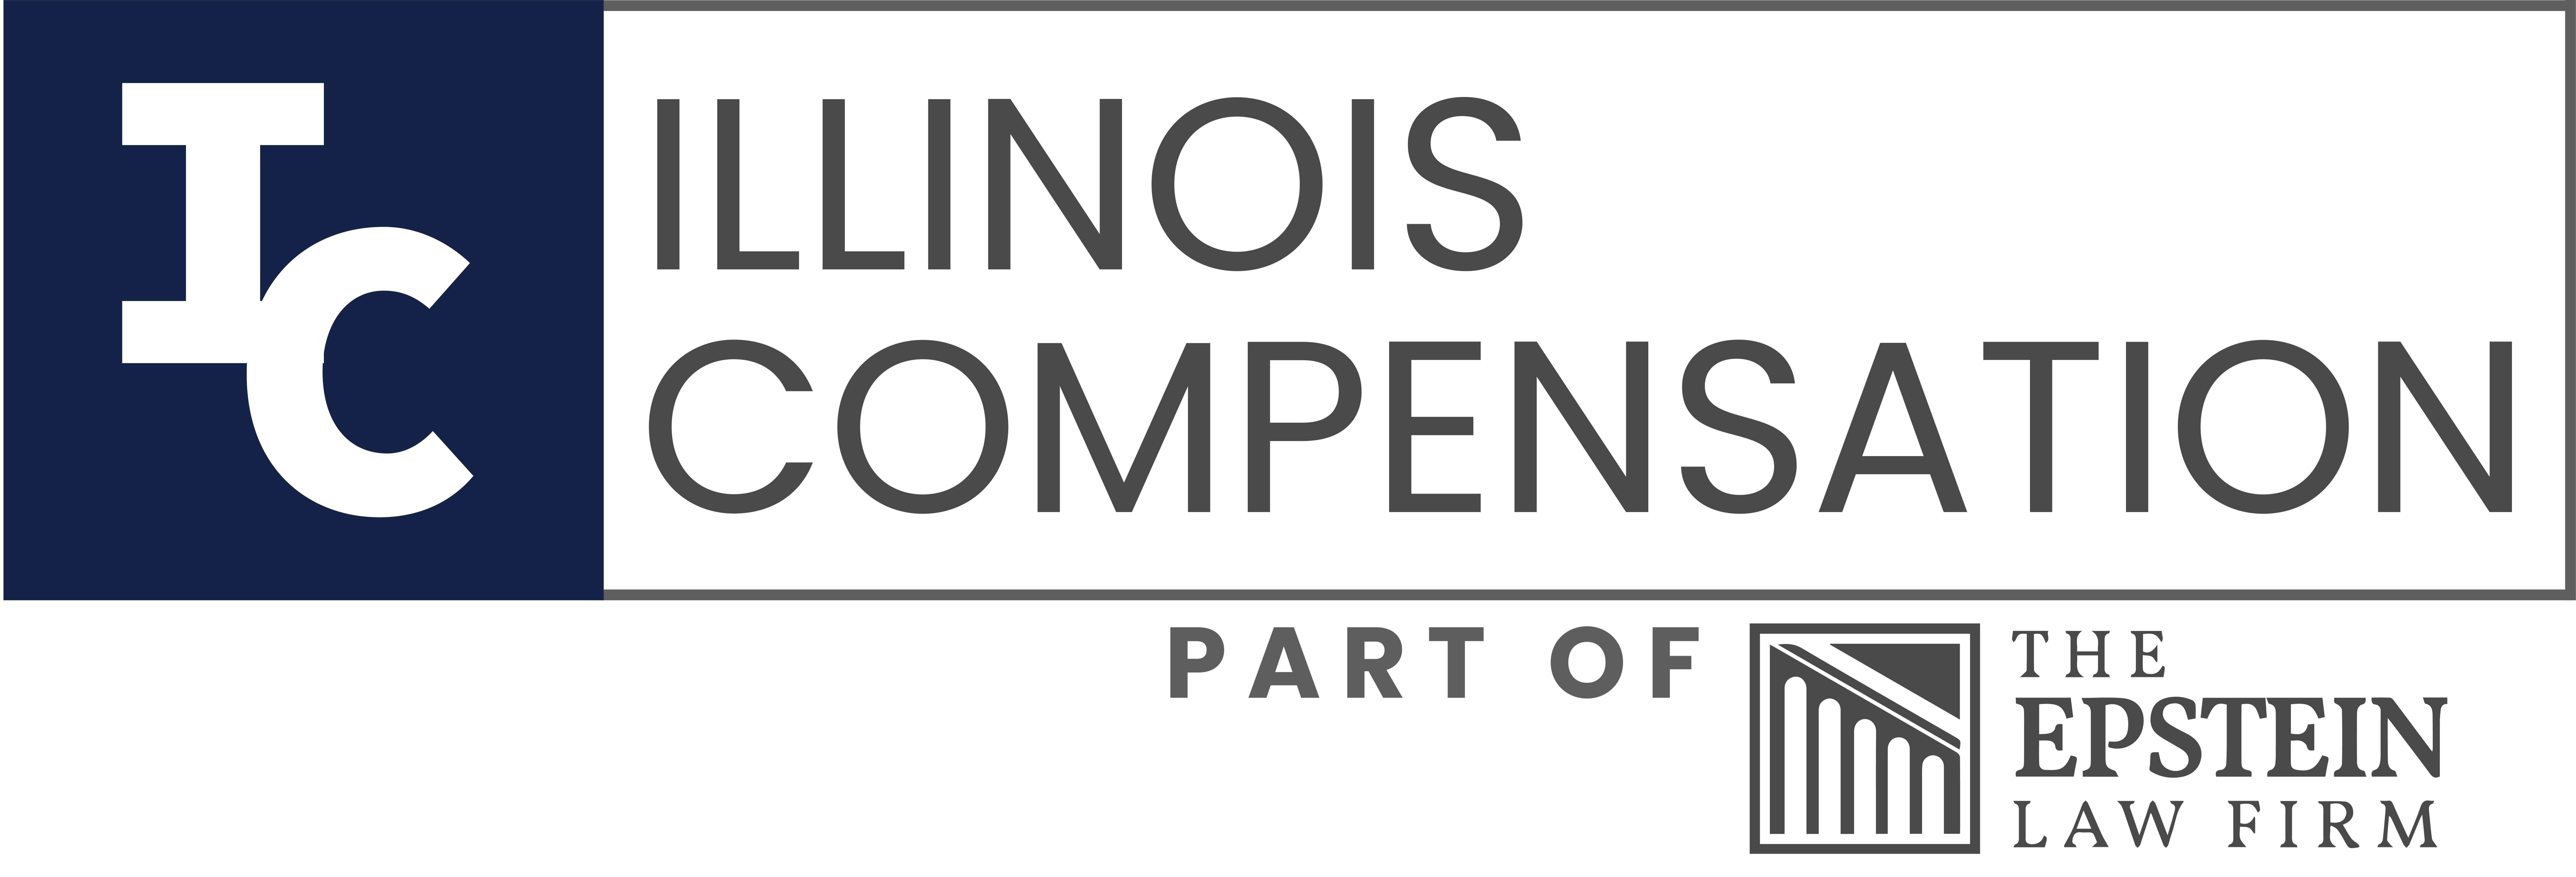 Illinois Compensation